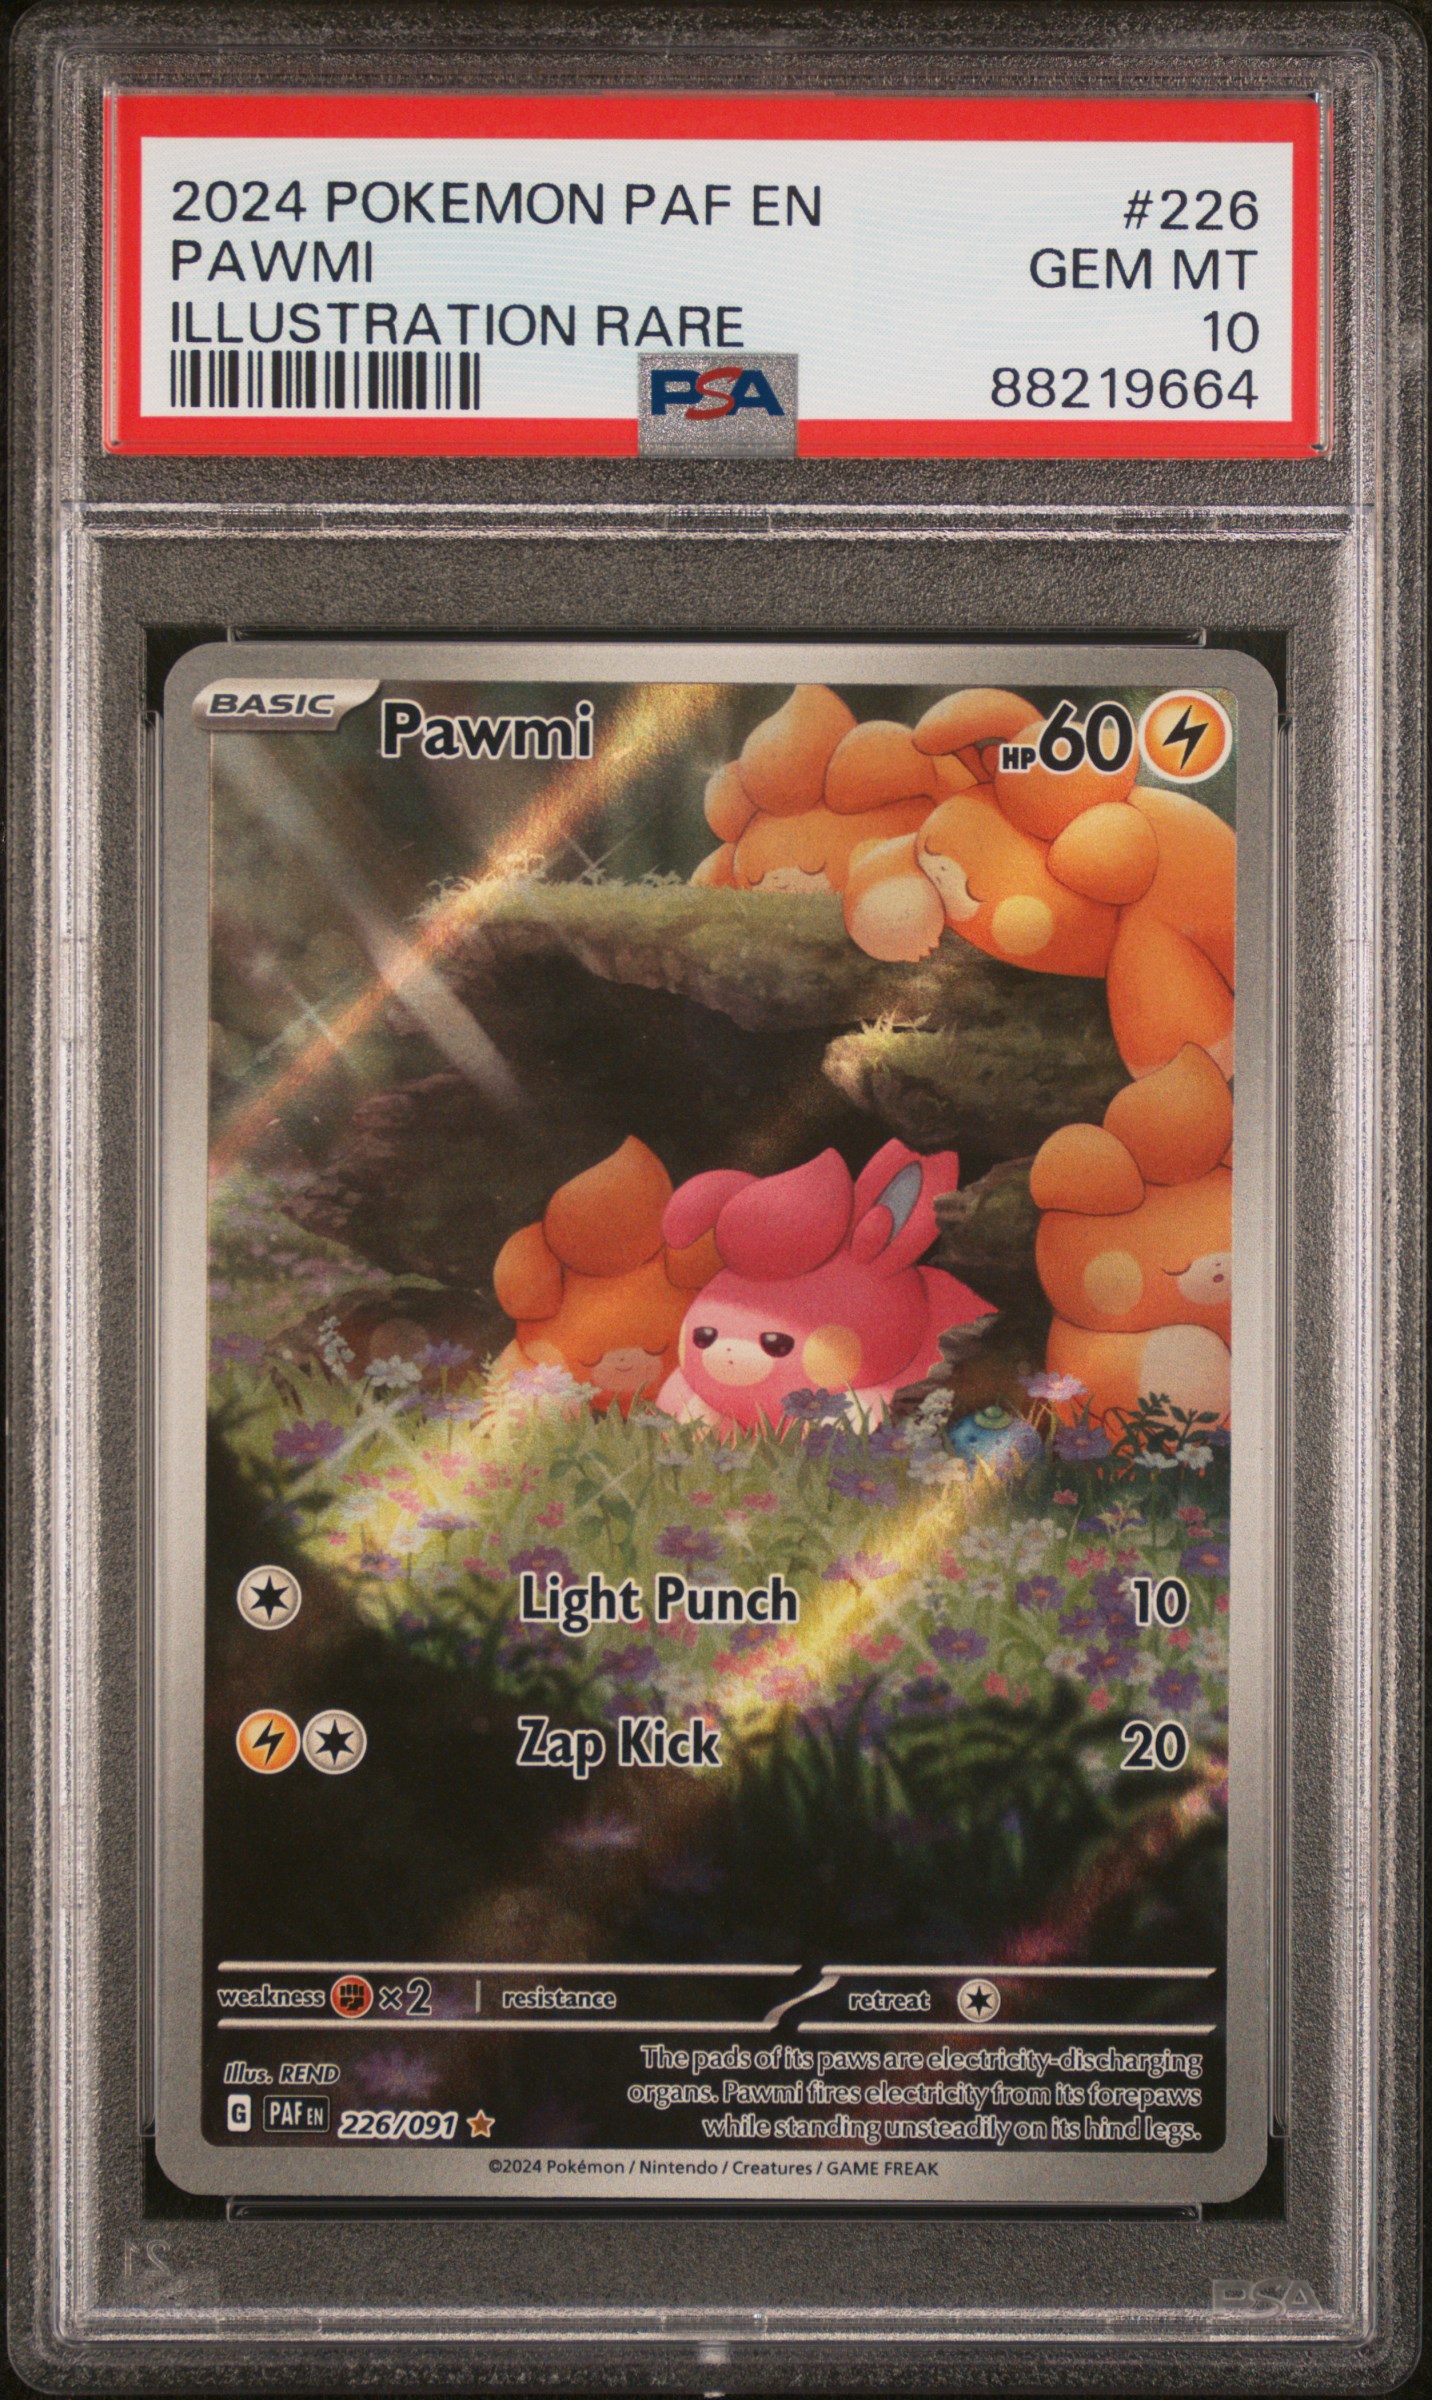 2024 Pokemon Paf En-Paldean Fates Illustration Rare 226 Pawmi – PSA GEM MT 10